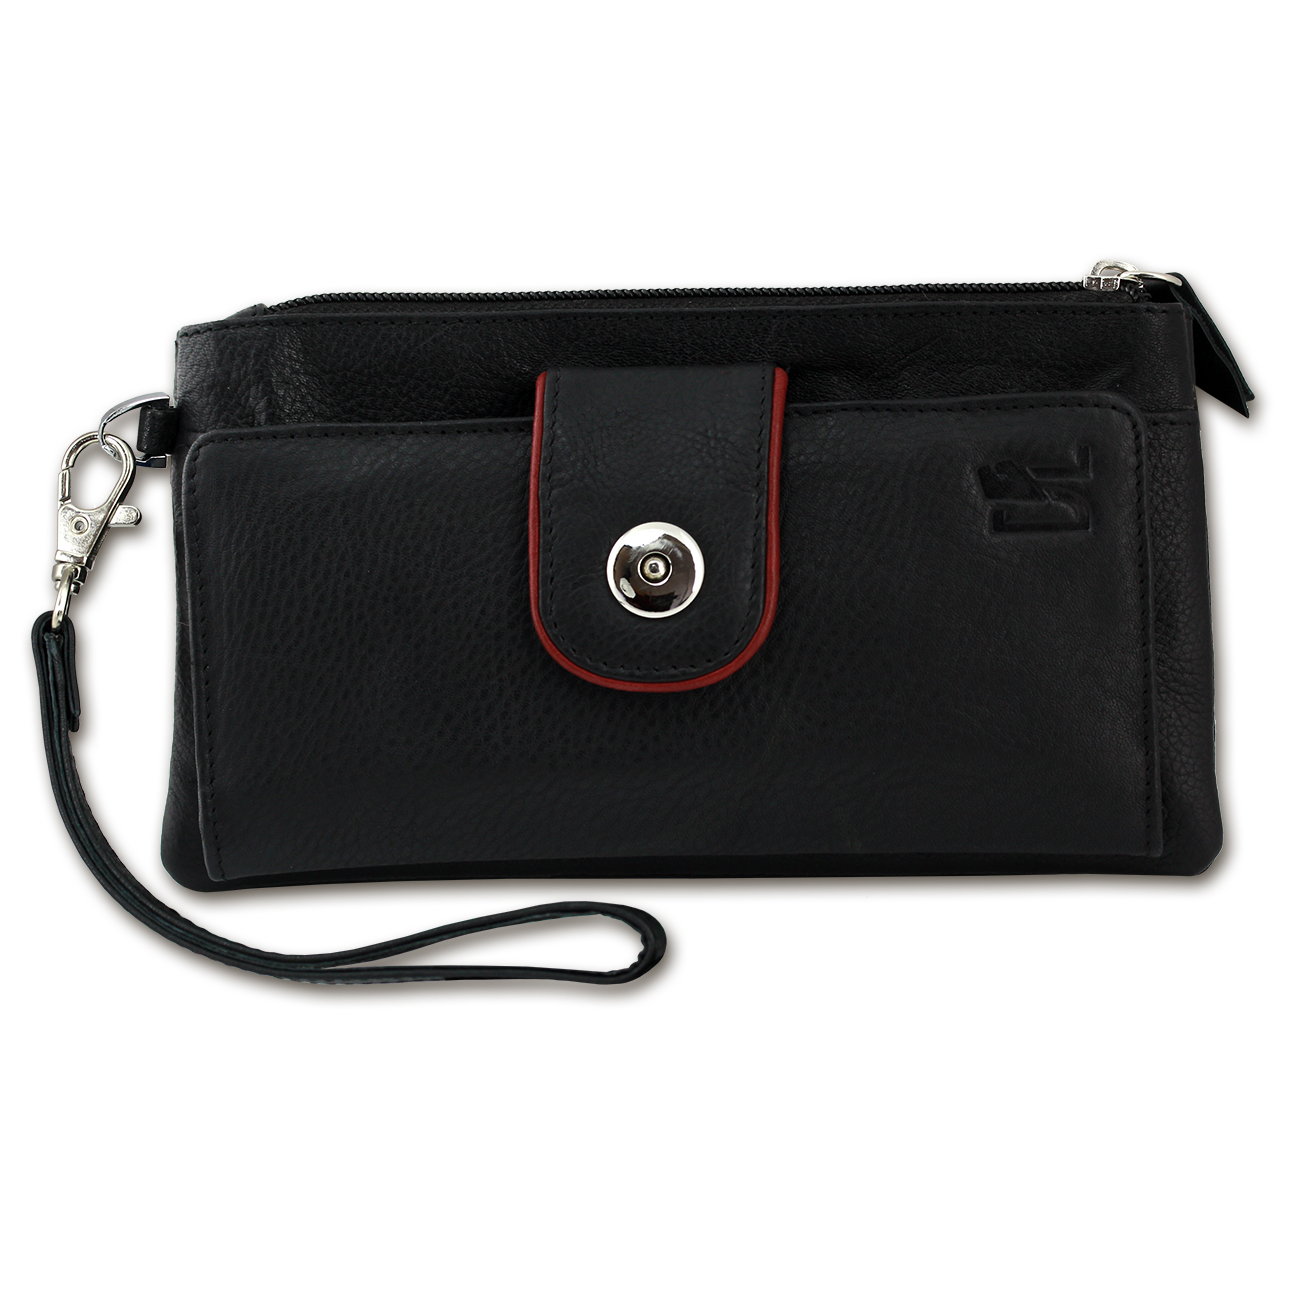 Purse Cell phone case Clutch Leather black Wristlet 3in1 DrachenLeder OTZ500S